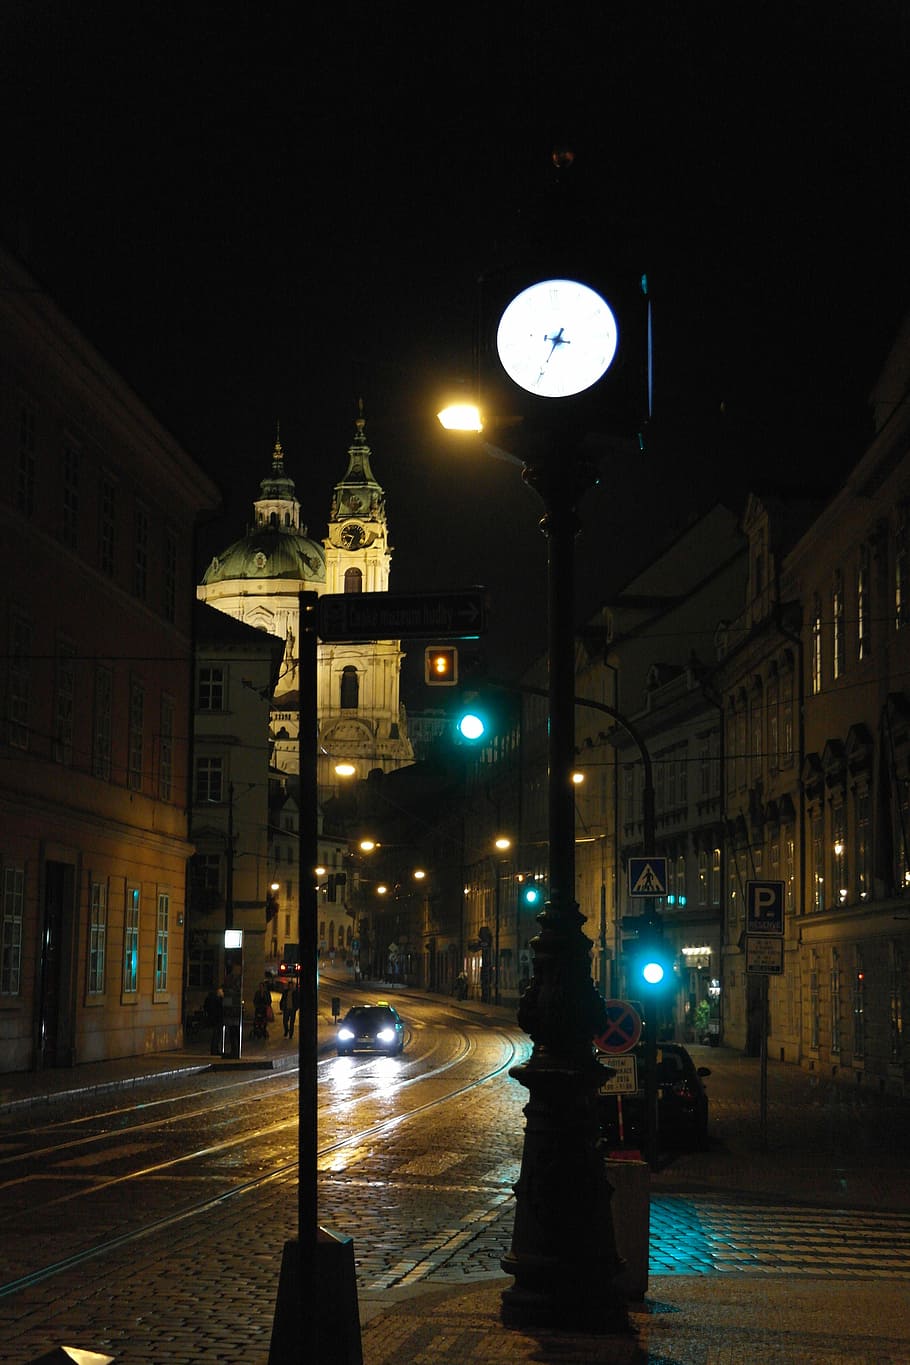 Republik Ceko, Malam, Kontras, Praha, pantulan cahaya, lampu, kastil, panel, diterangi, arsitektur